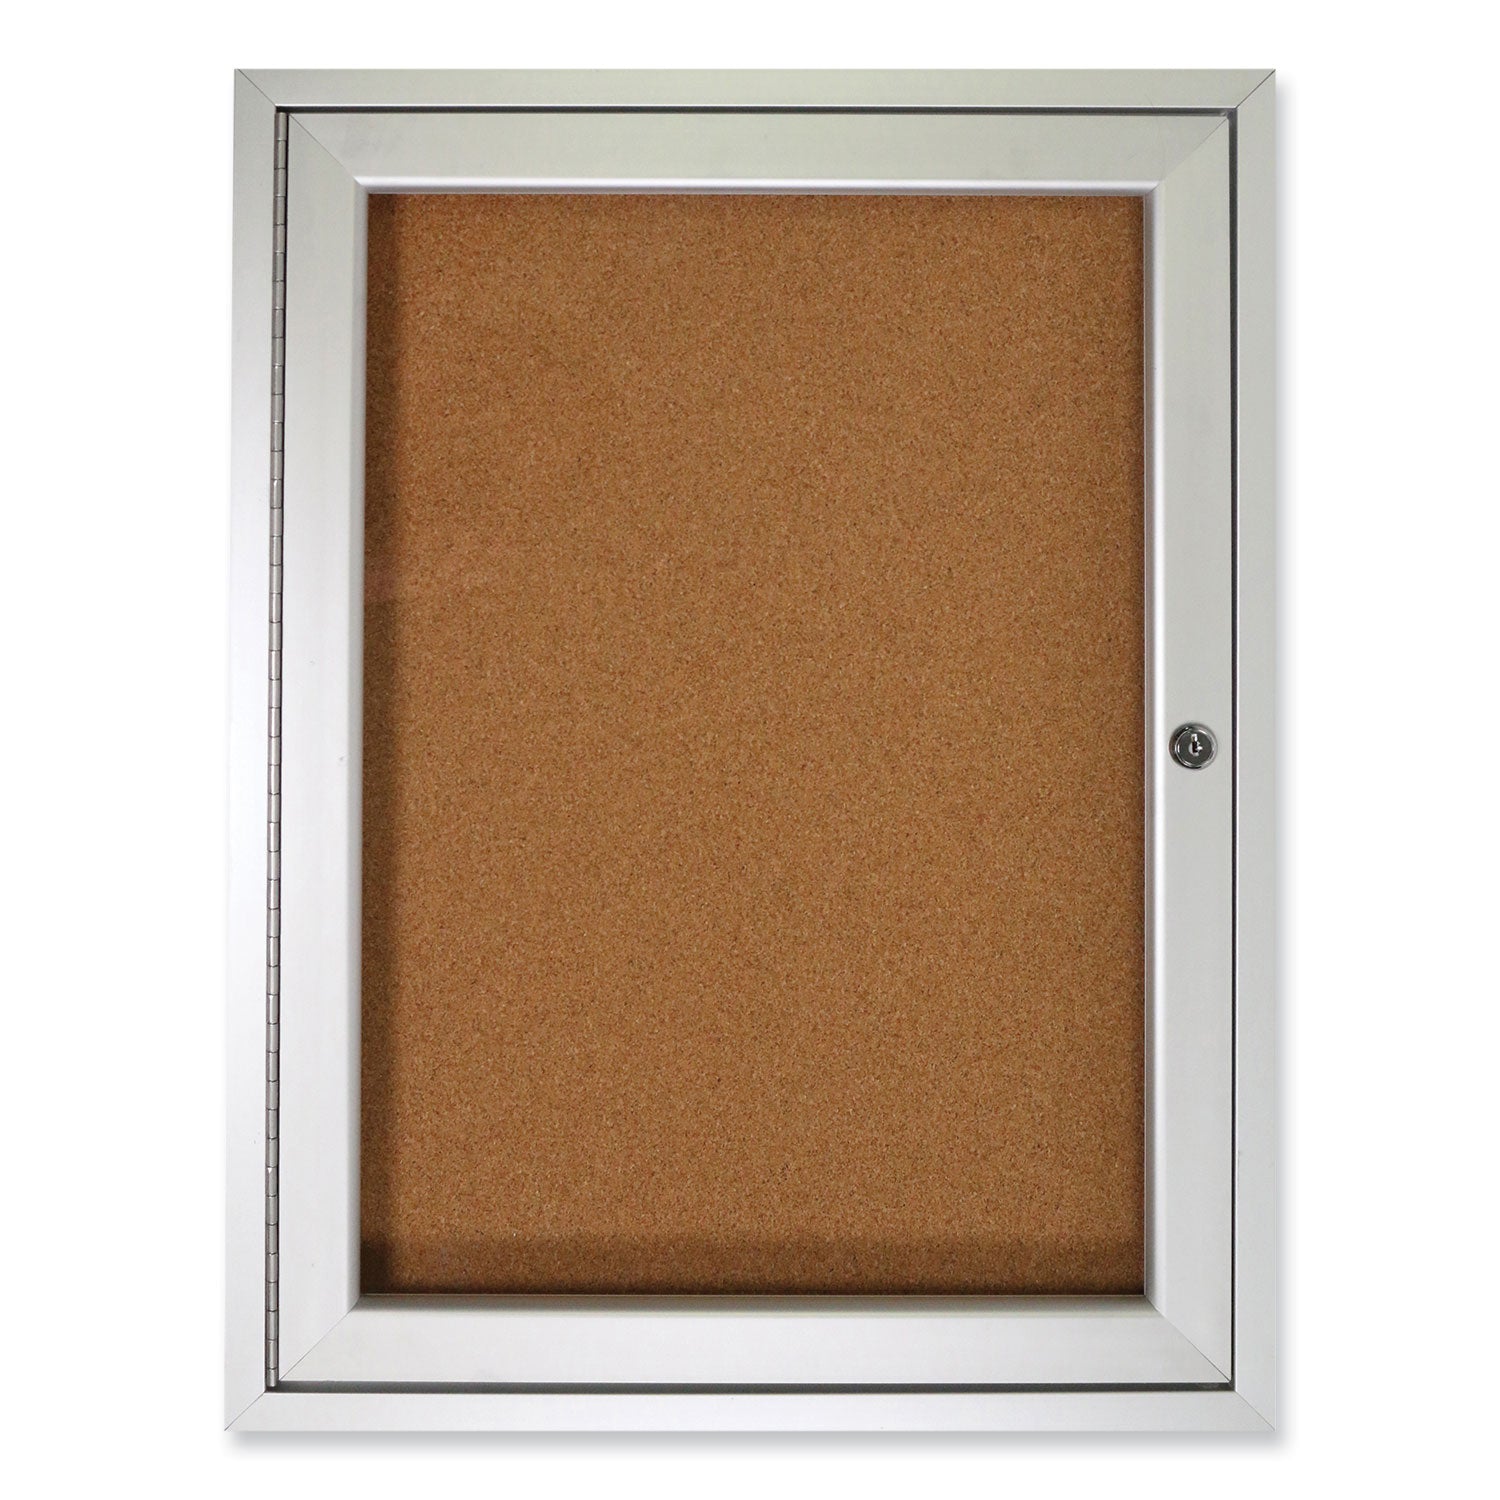 1 Door Enclosed Natural Cork Bulletin Board with Satin Aluminum Frame, 24 x 36, Tan Surface, Ships in 7-10 Business Days - 